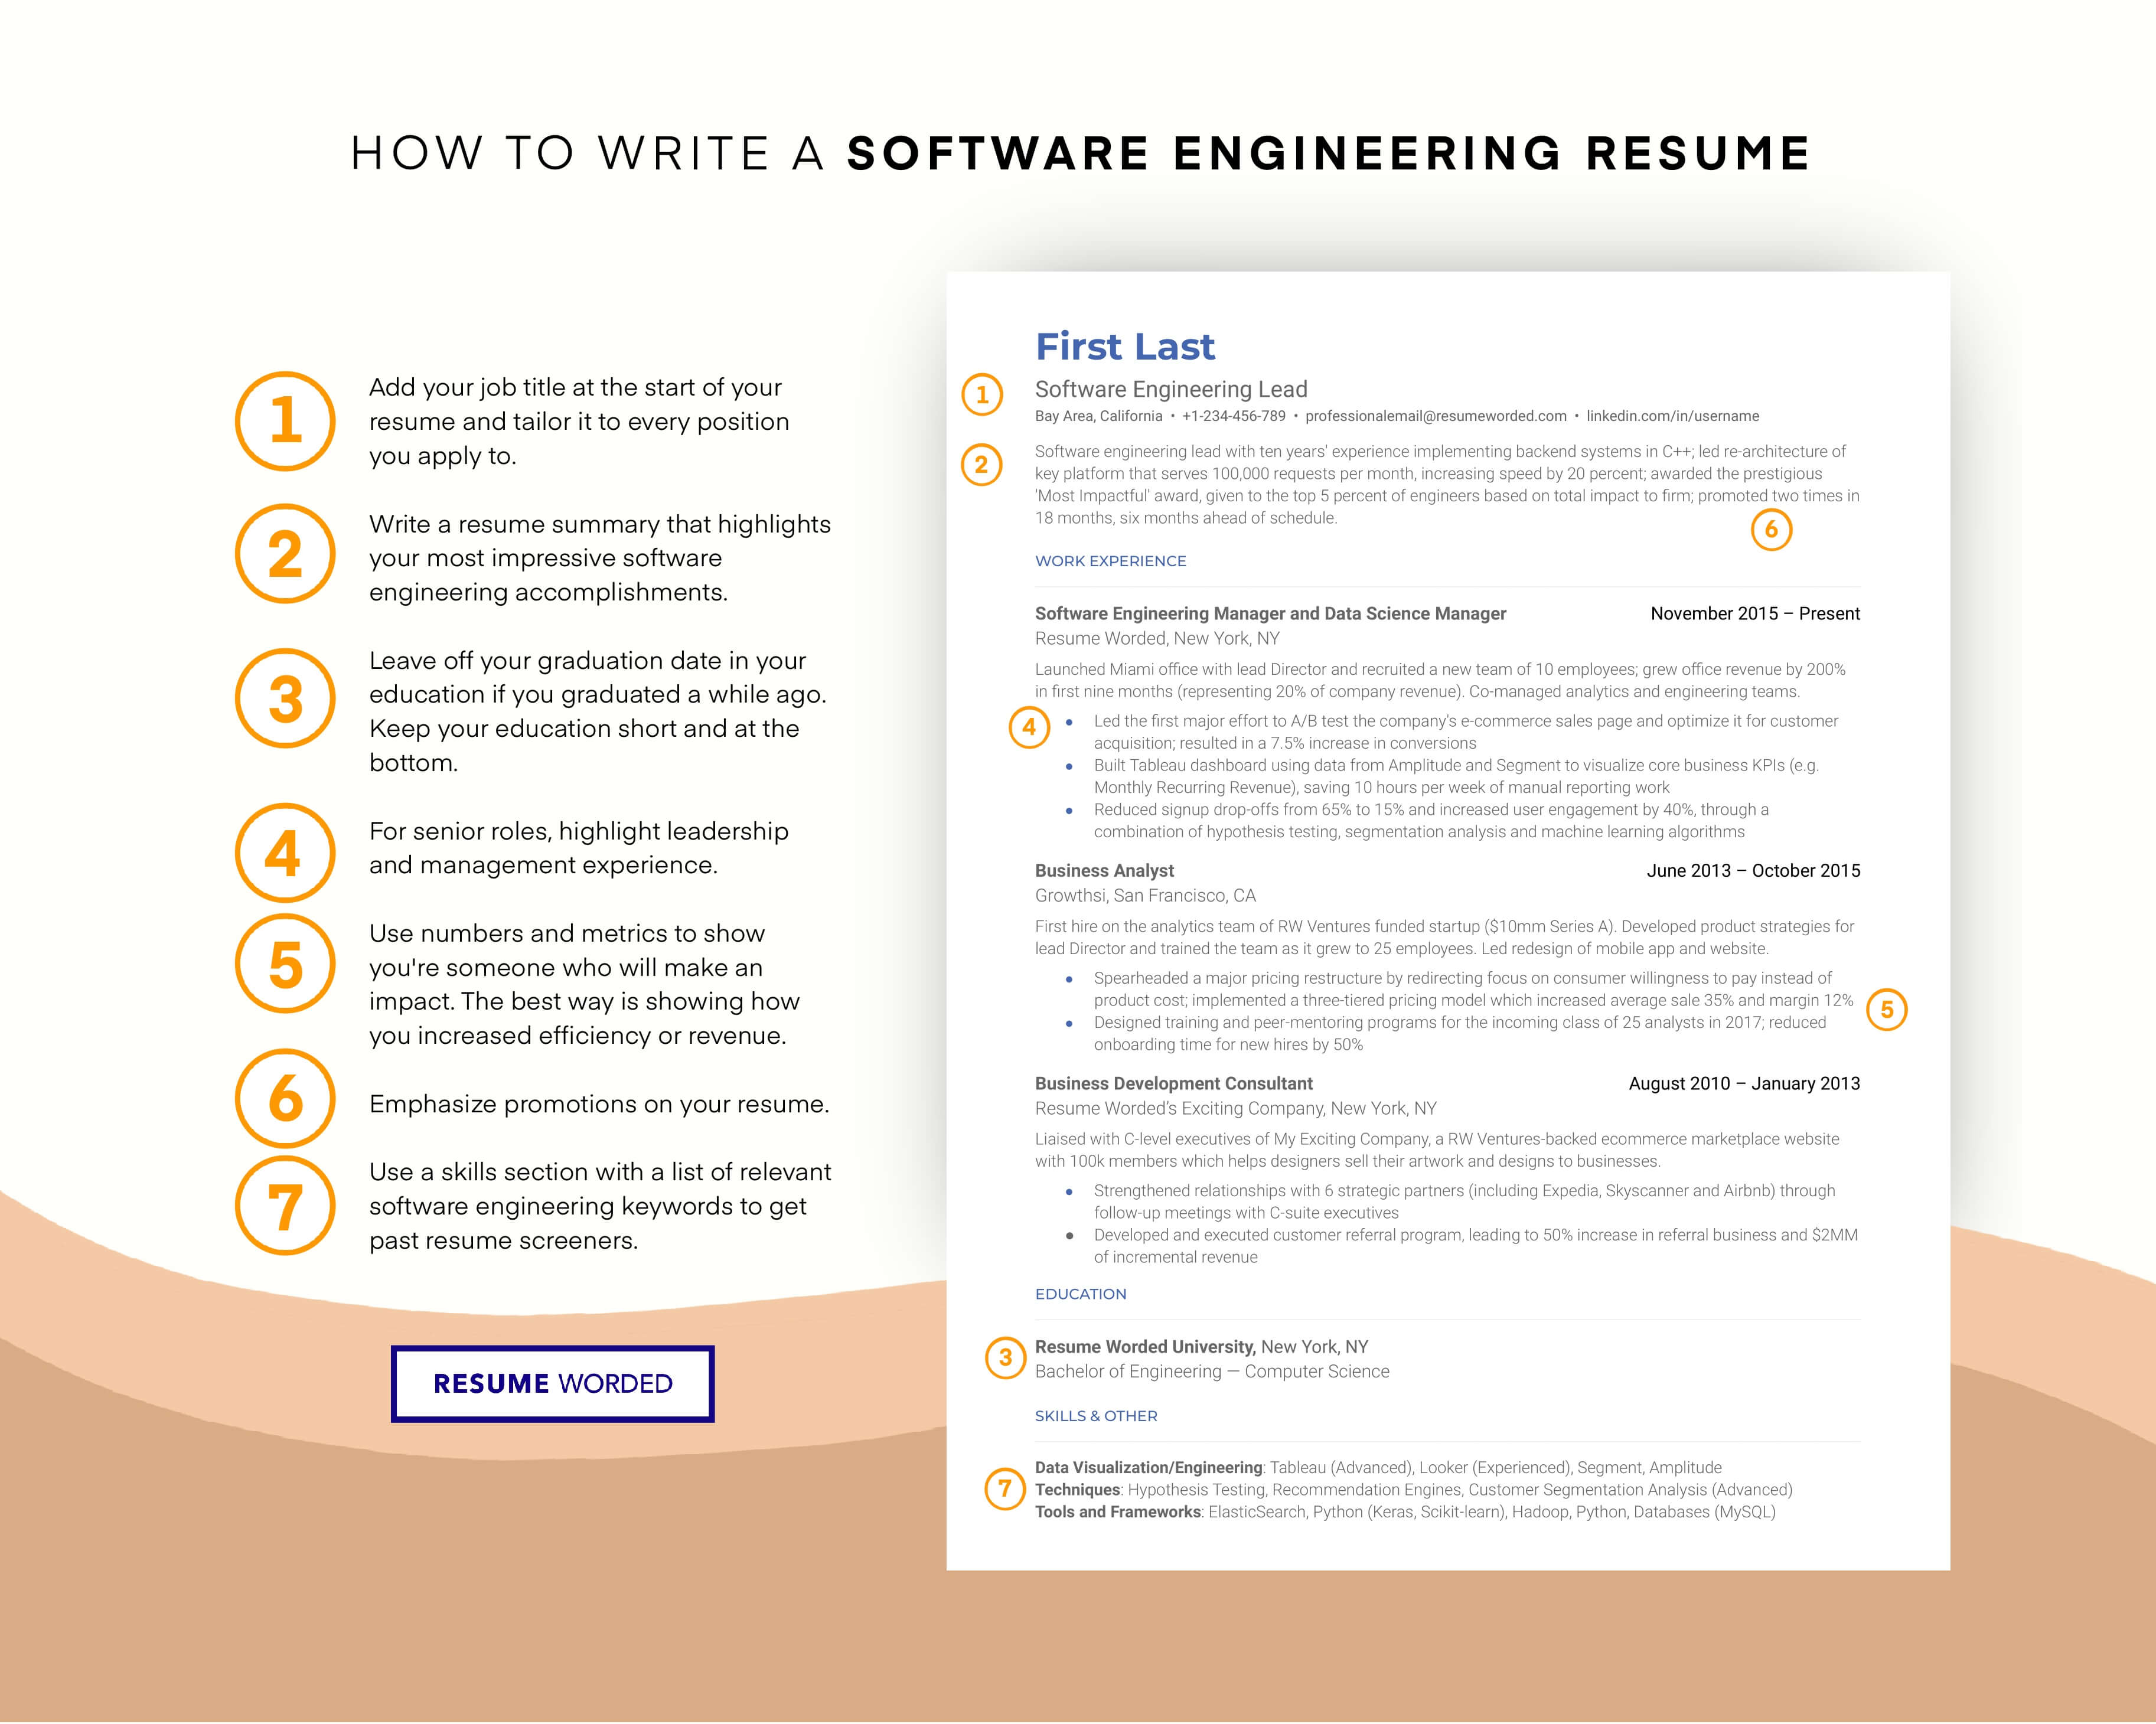 Highlight software expertise - Bookkeeper Resume